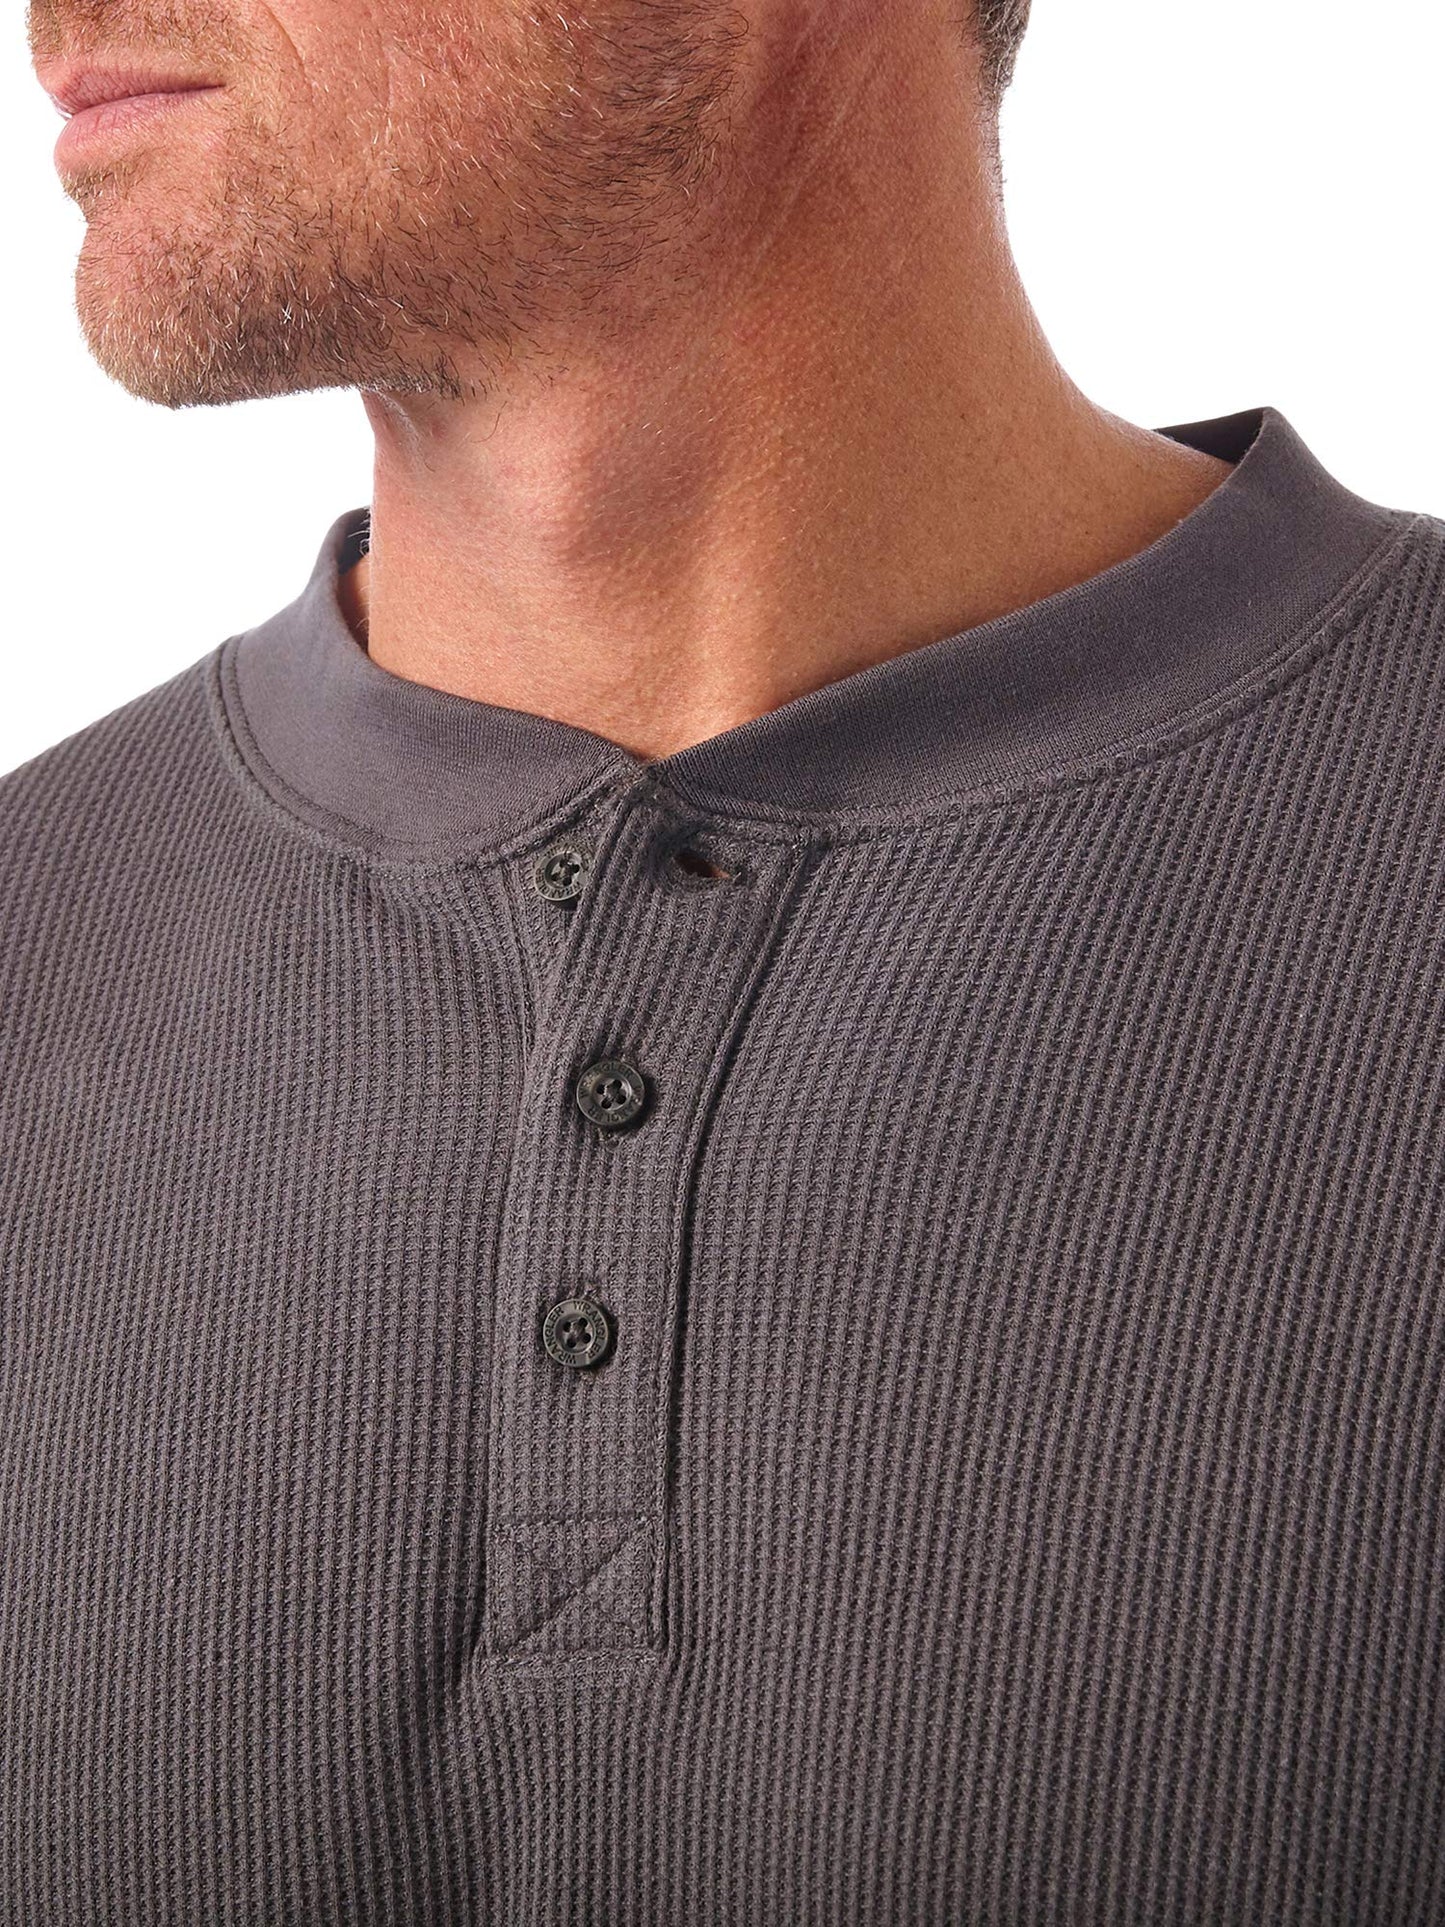 Wrangler Authentics Men's Long Sleeve Waffle Henley, Dark Charcoal, Large